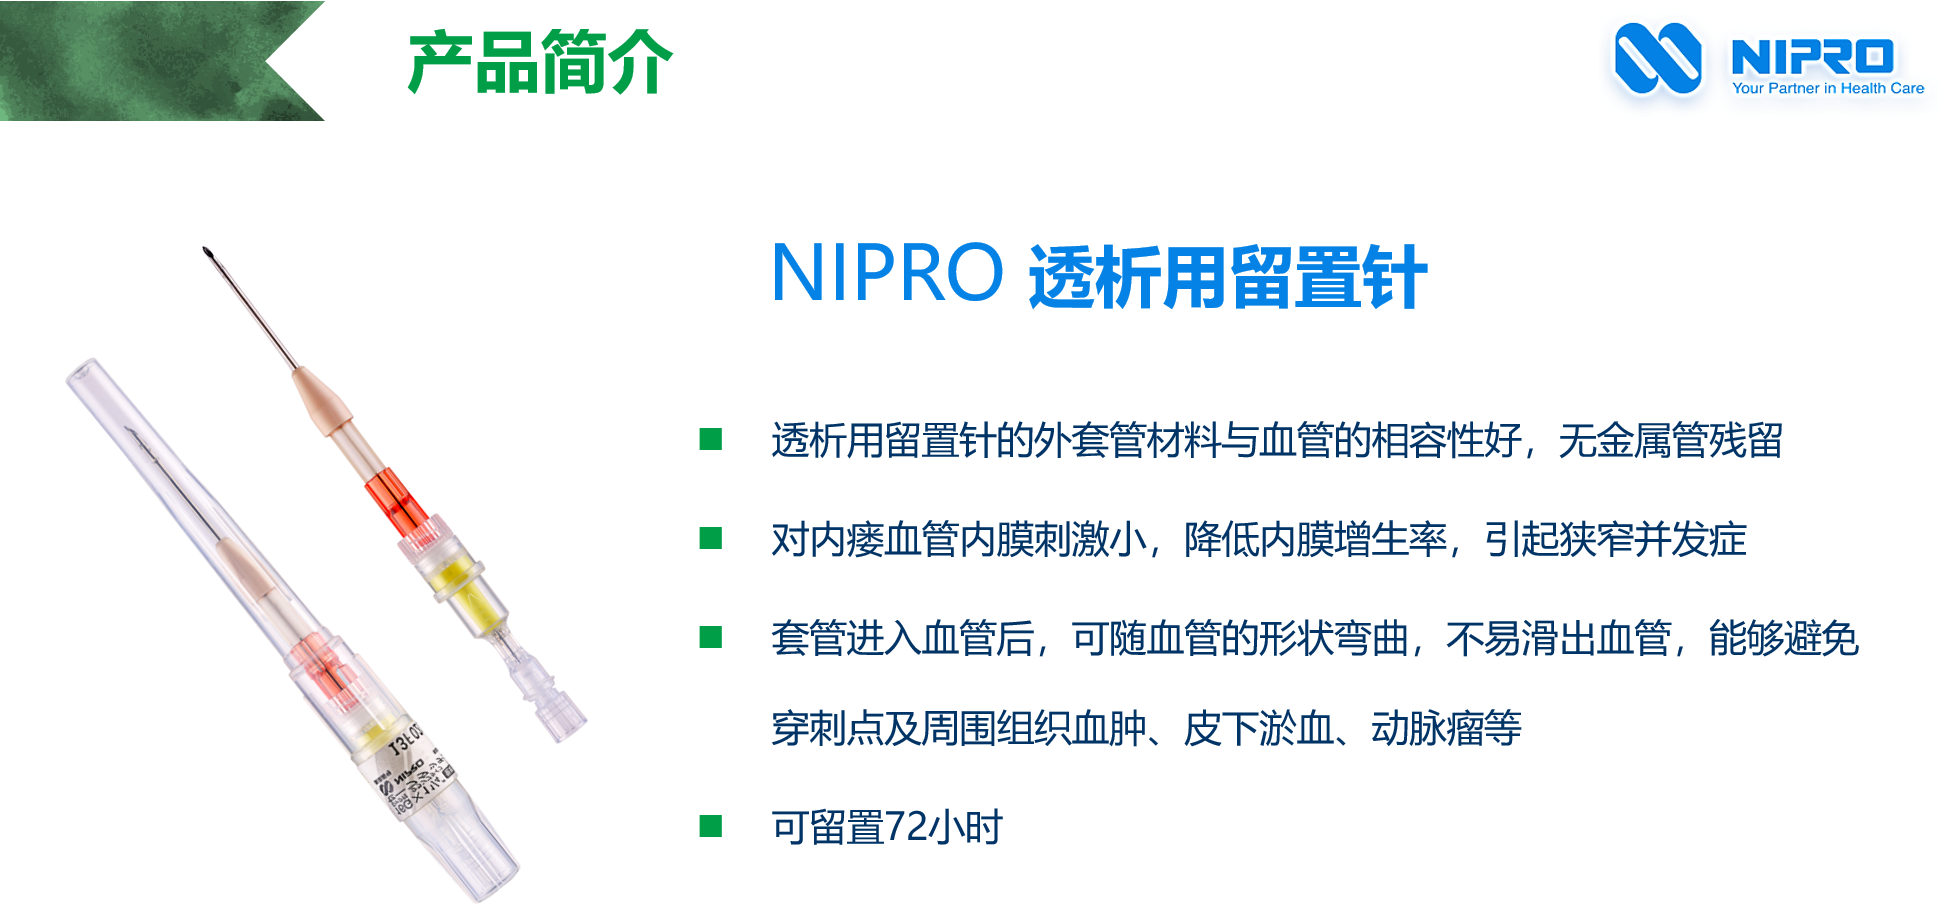 nipro 透析用留置针